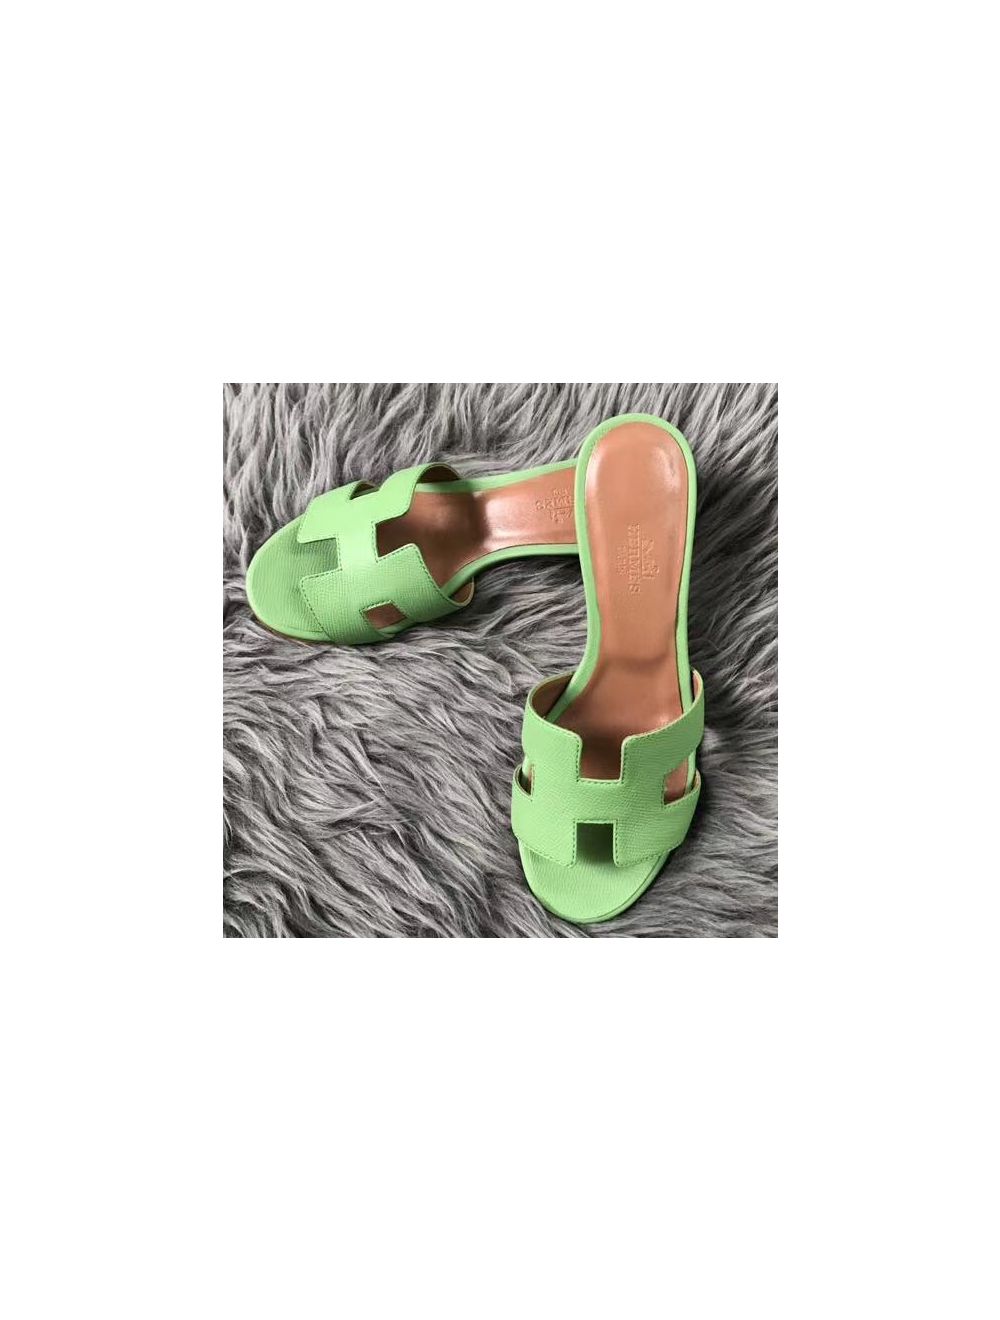 Replica Hermes Oasis Sandals In Vert Criquet Epsom Leather